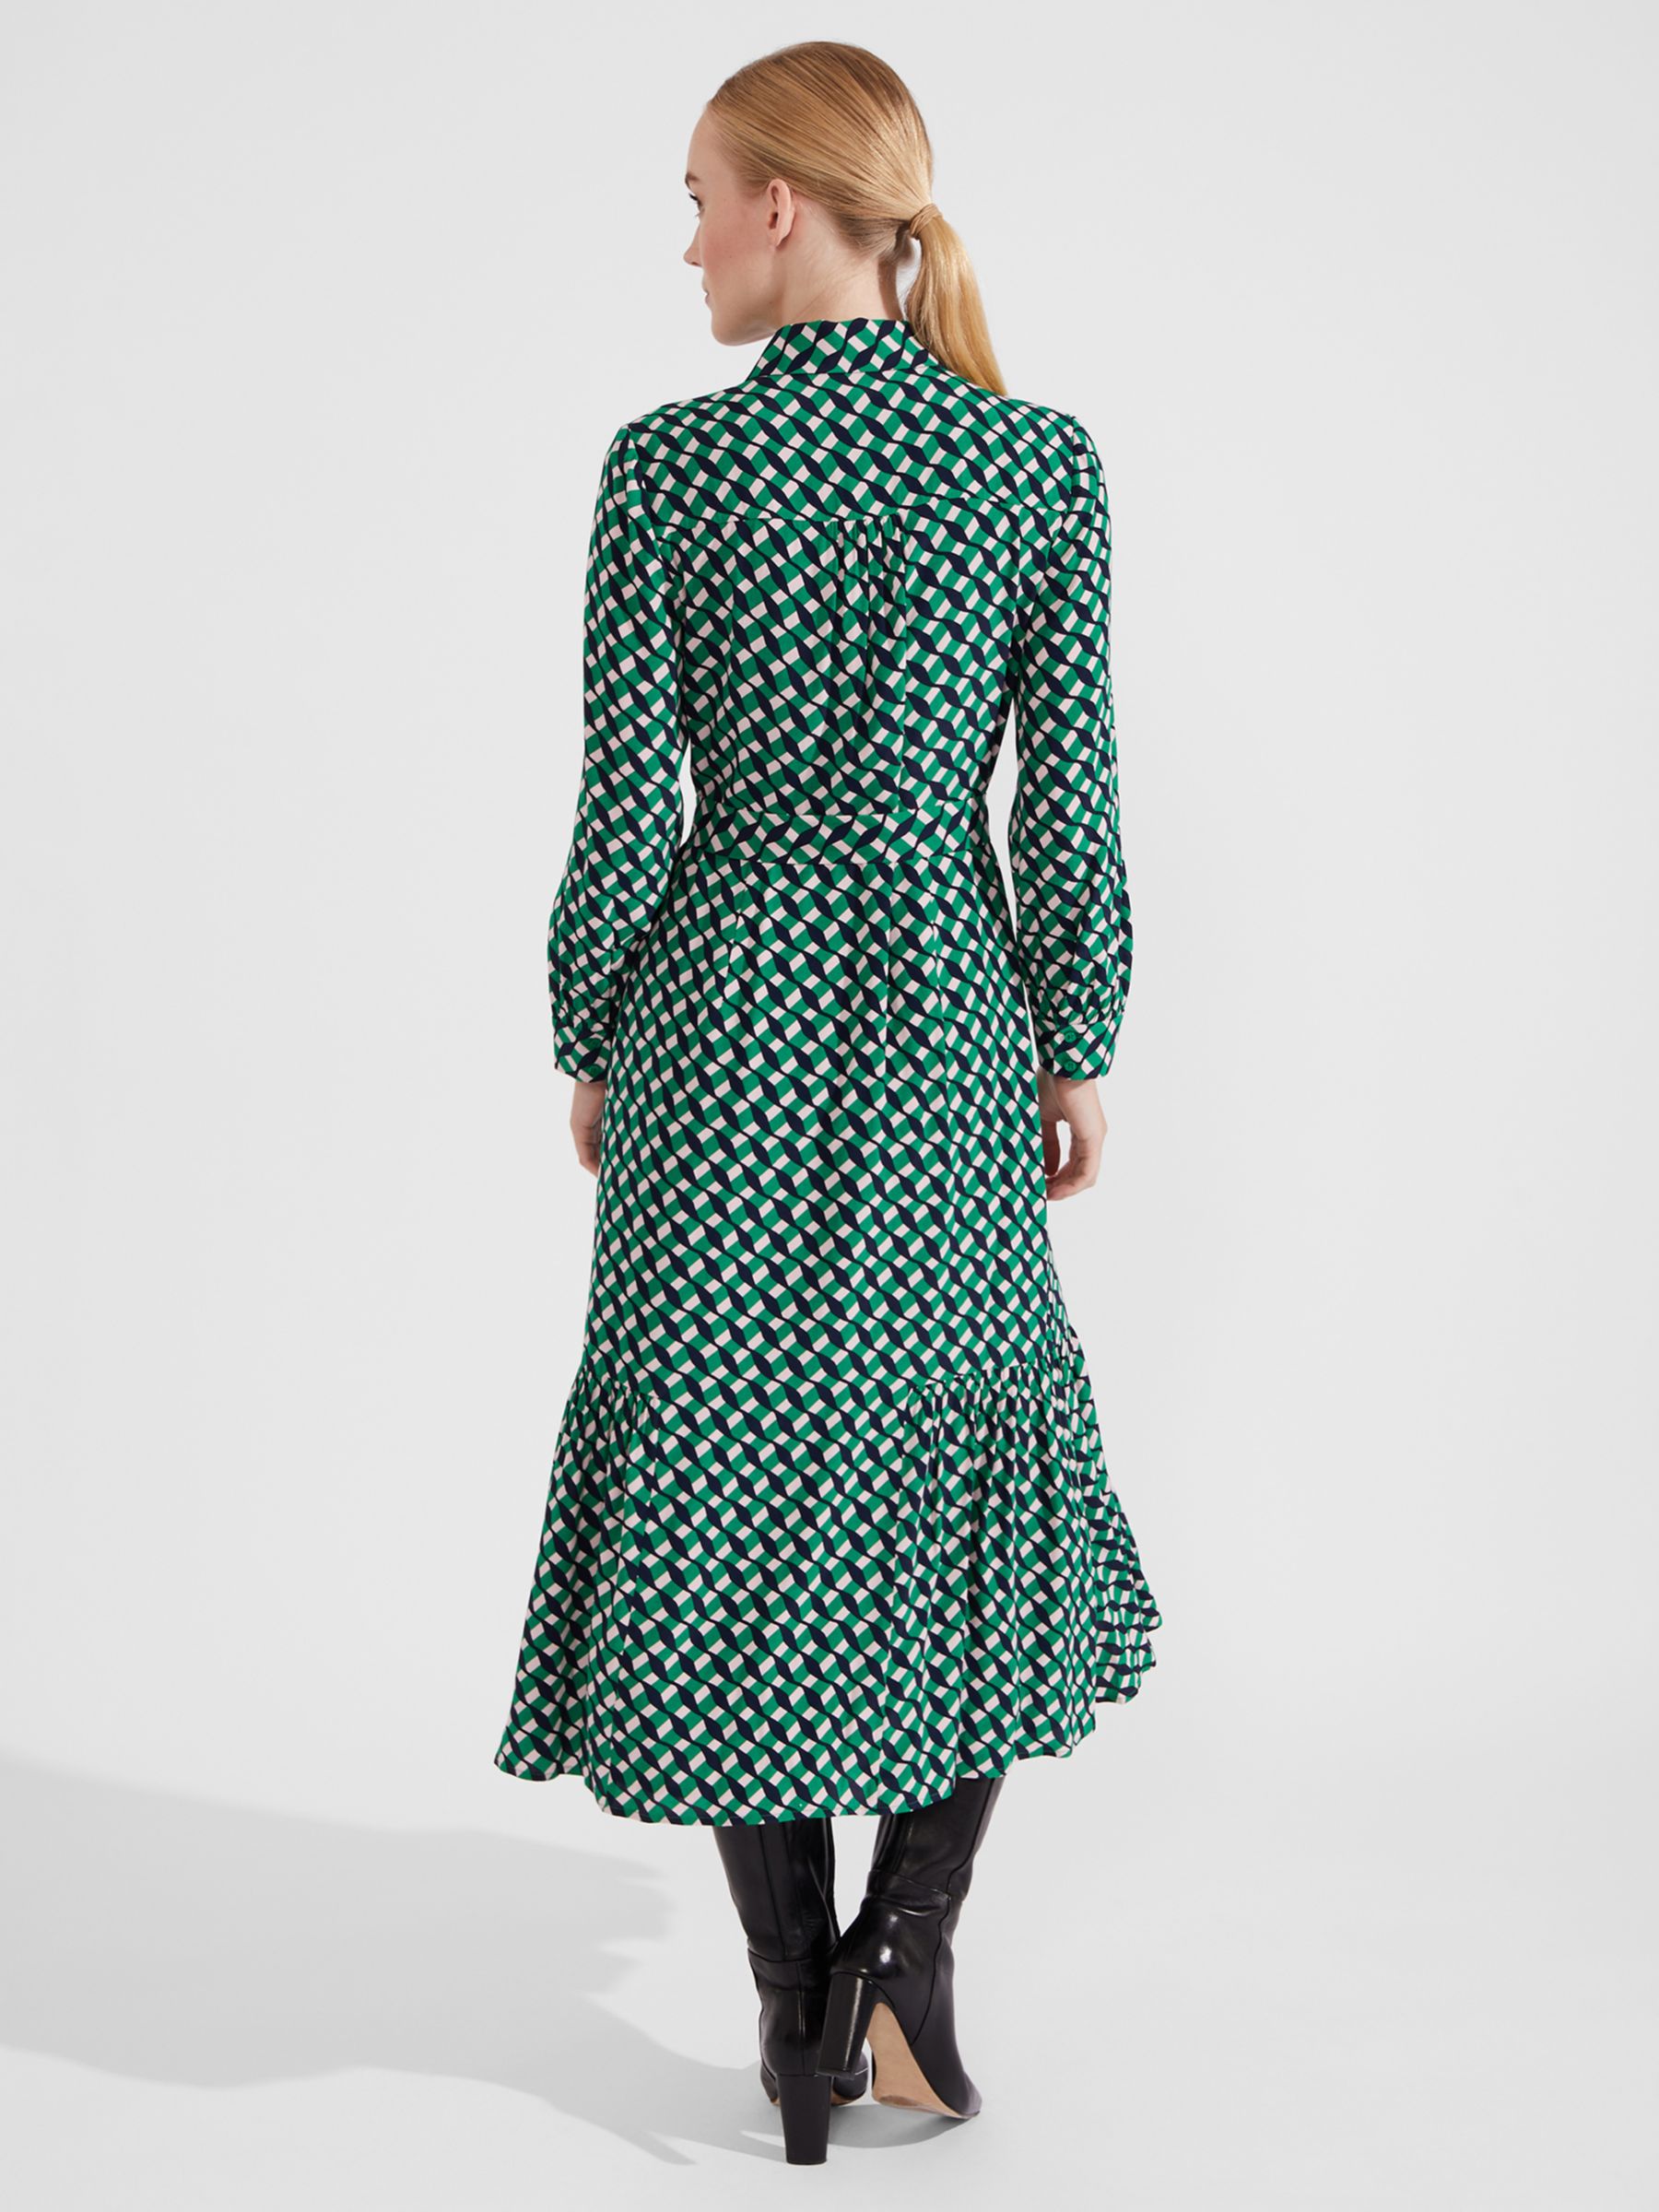 Hobbs Petite Emberly Geometric Print Midi Shirt Dress, Green/Multi, 10